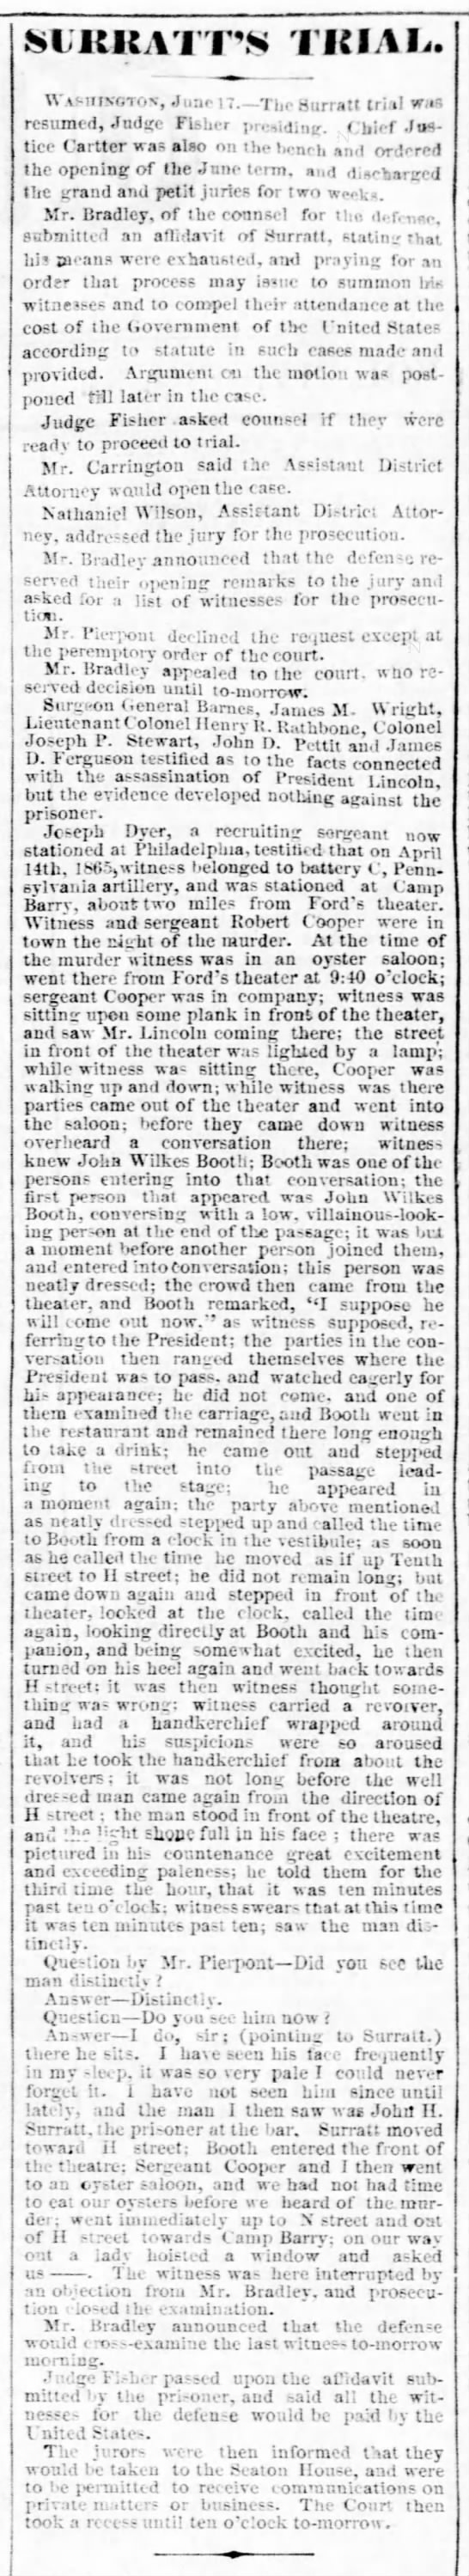 Surrait Trial John Wilks Booth 22 Jun 1868 Newspapers Com